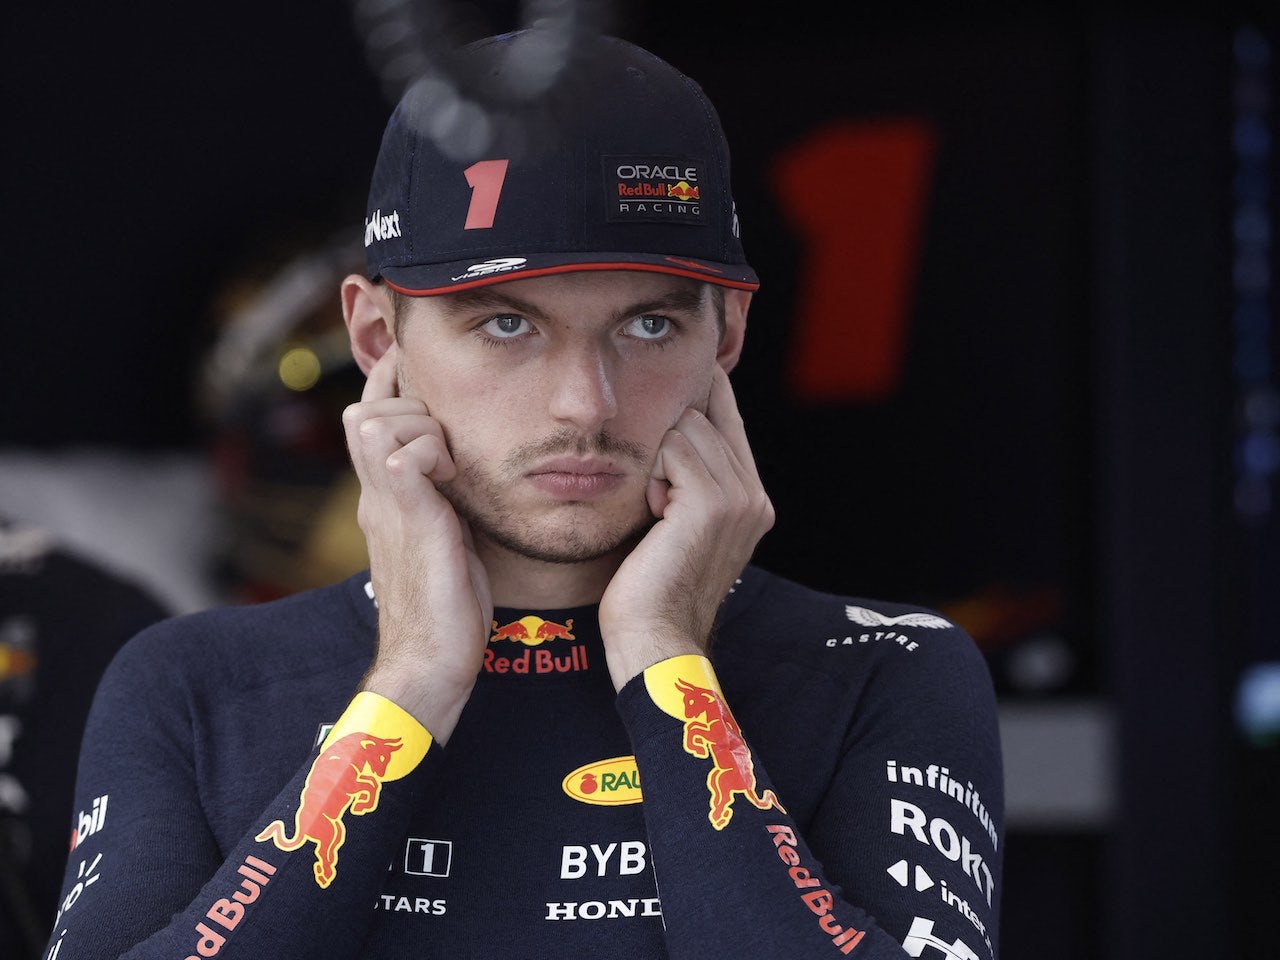 Red Bull tested 2022 car to address Verstappen's struggles